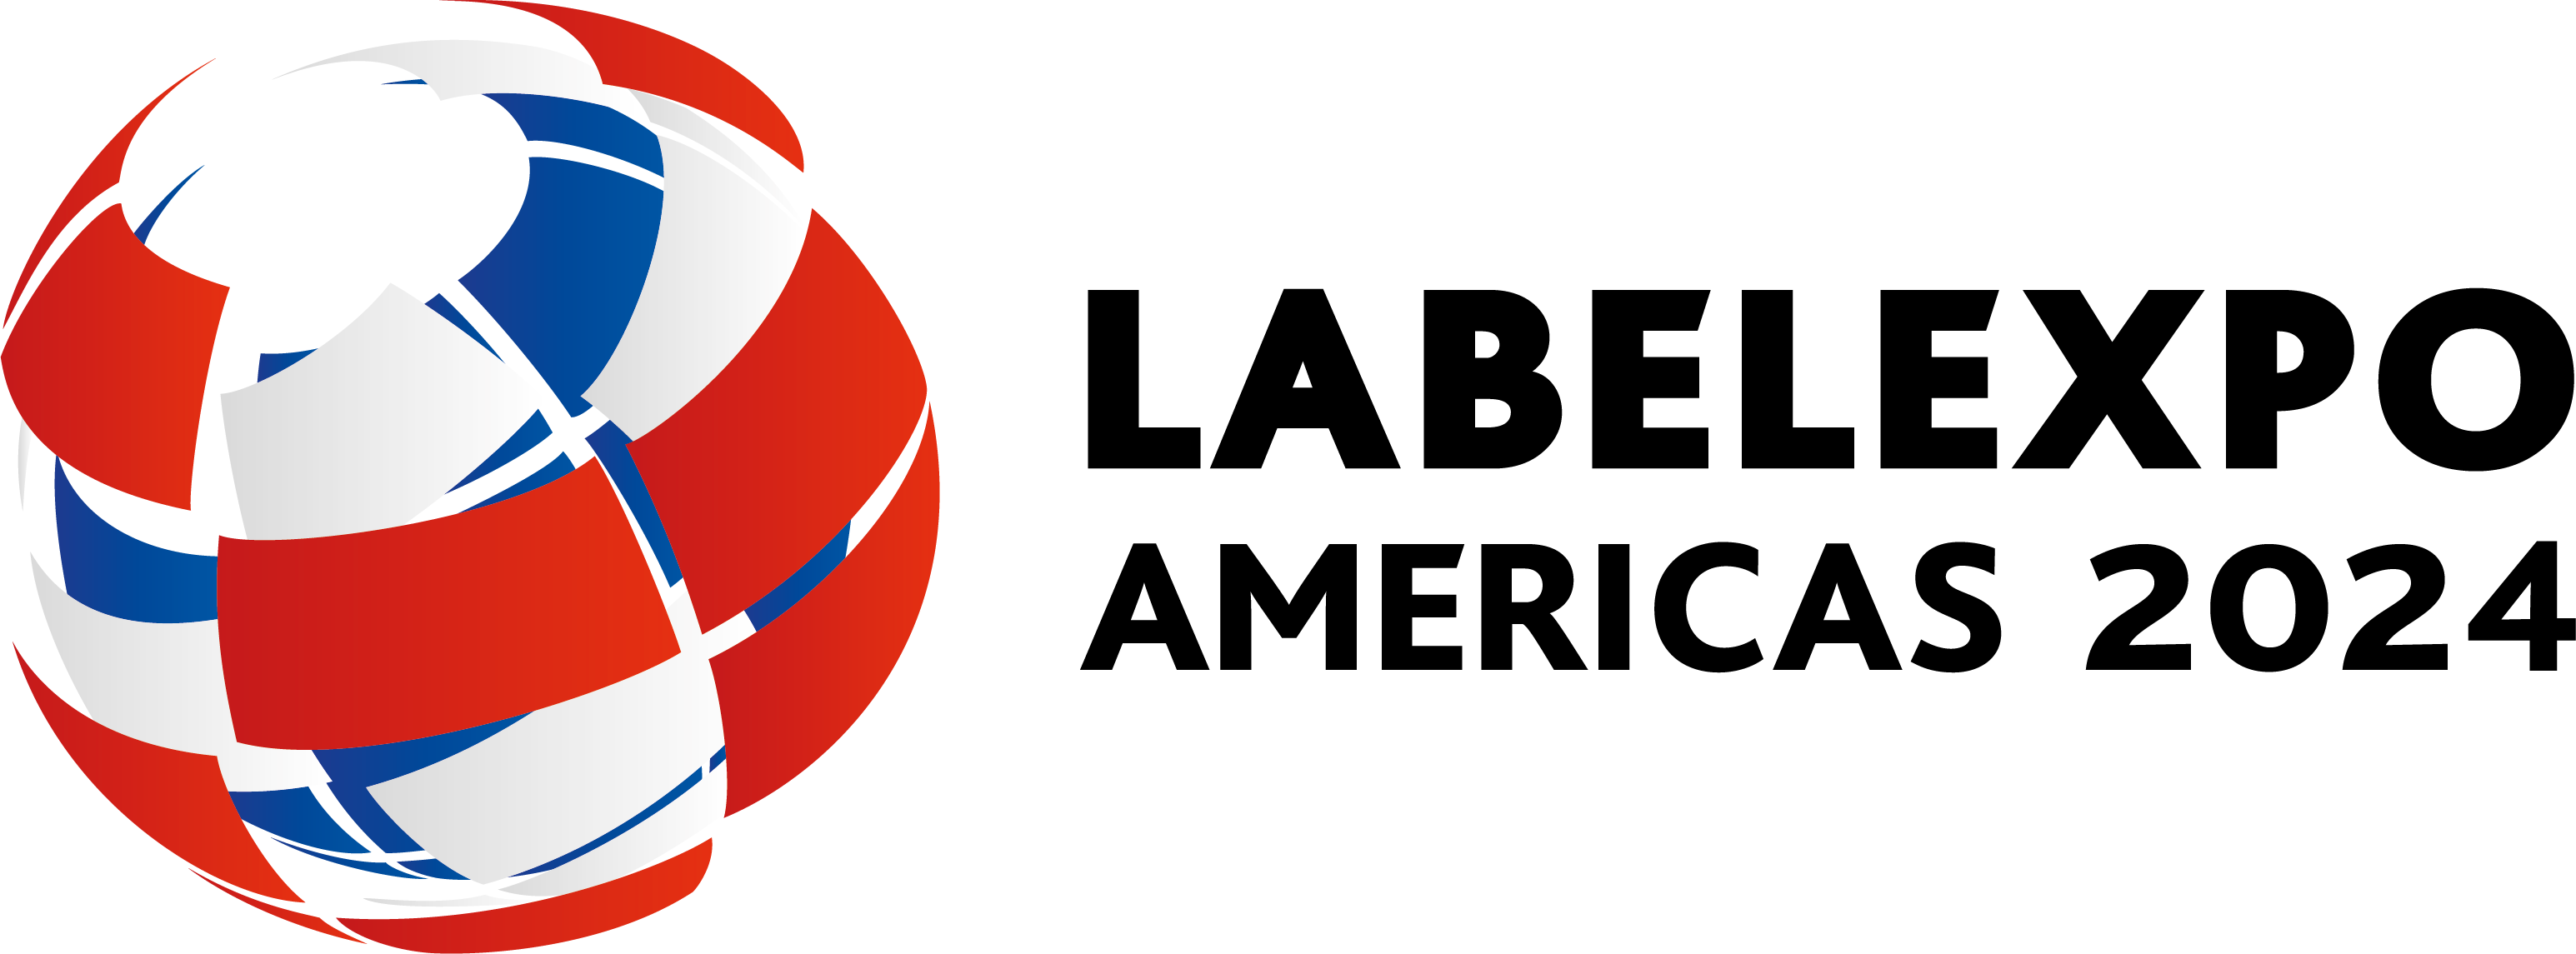 Labelexpo_Americas_2024_logo